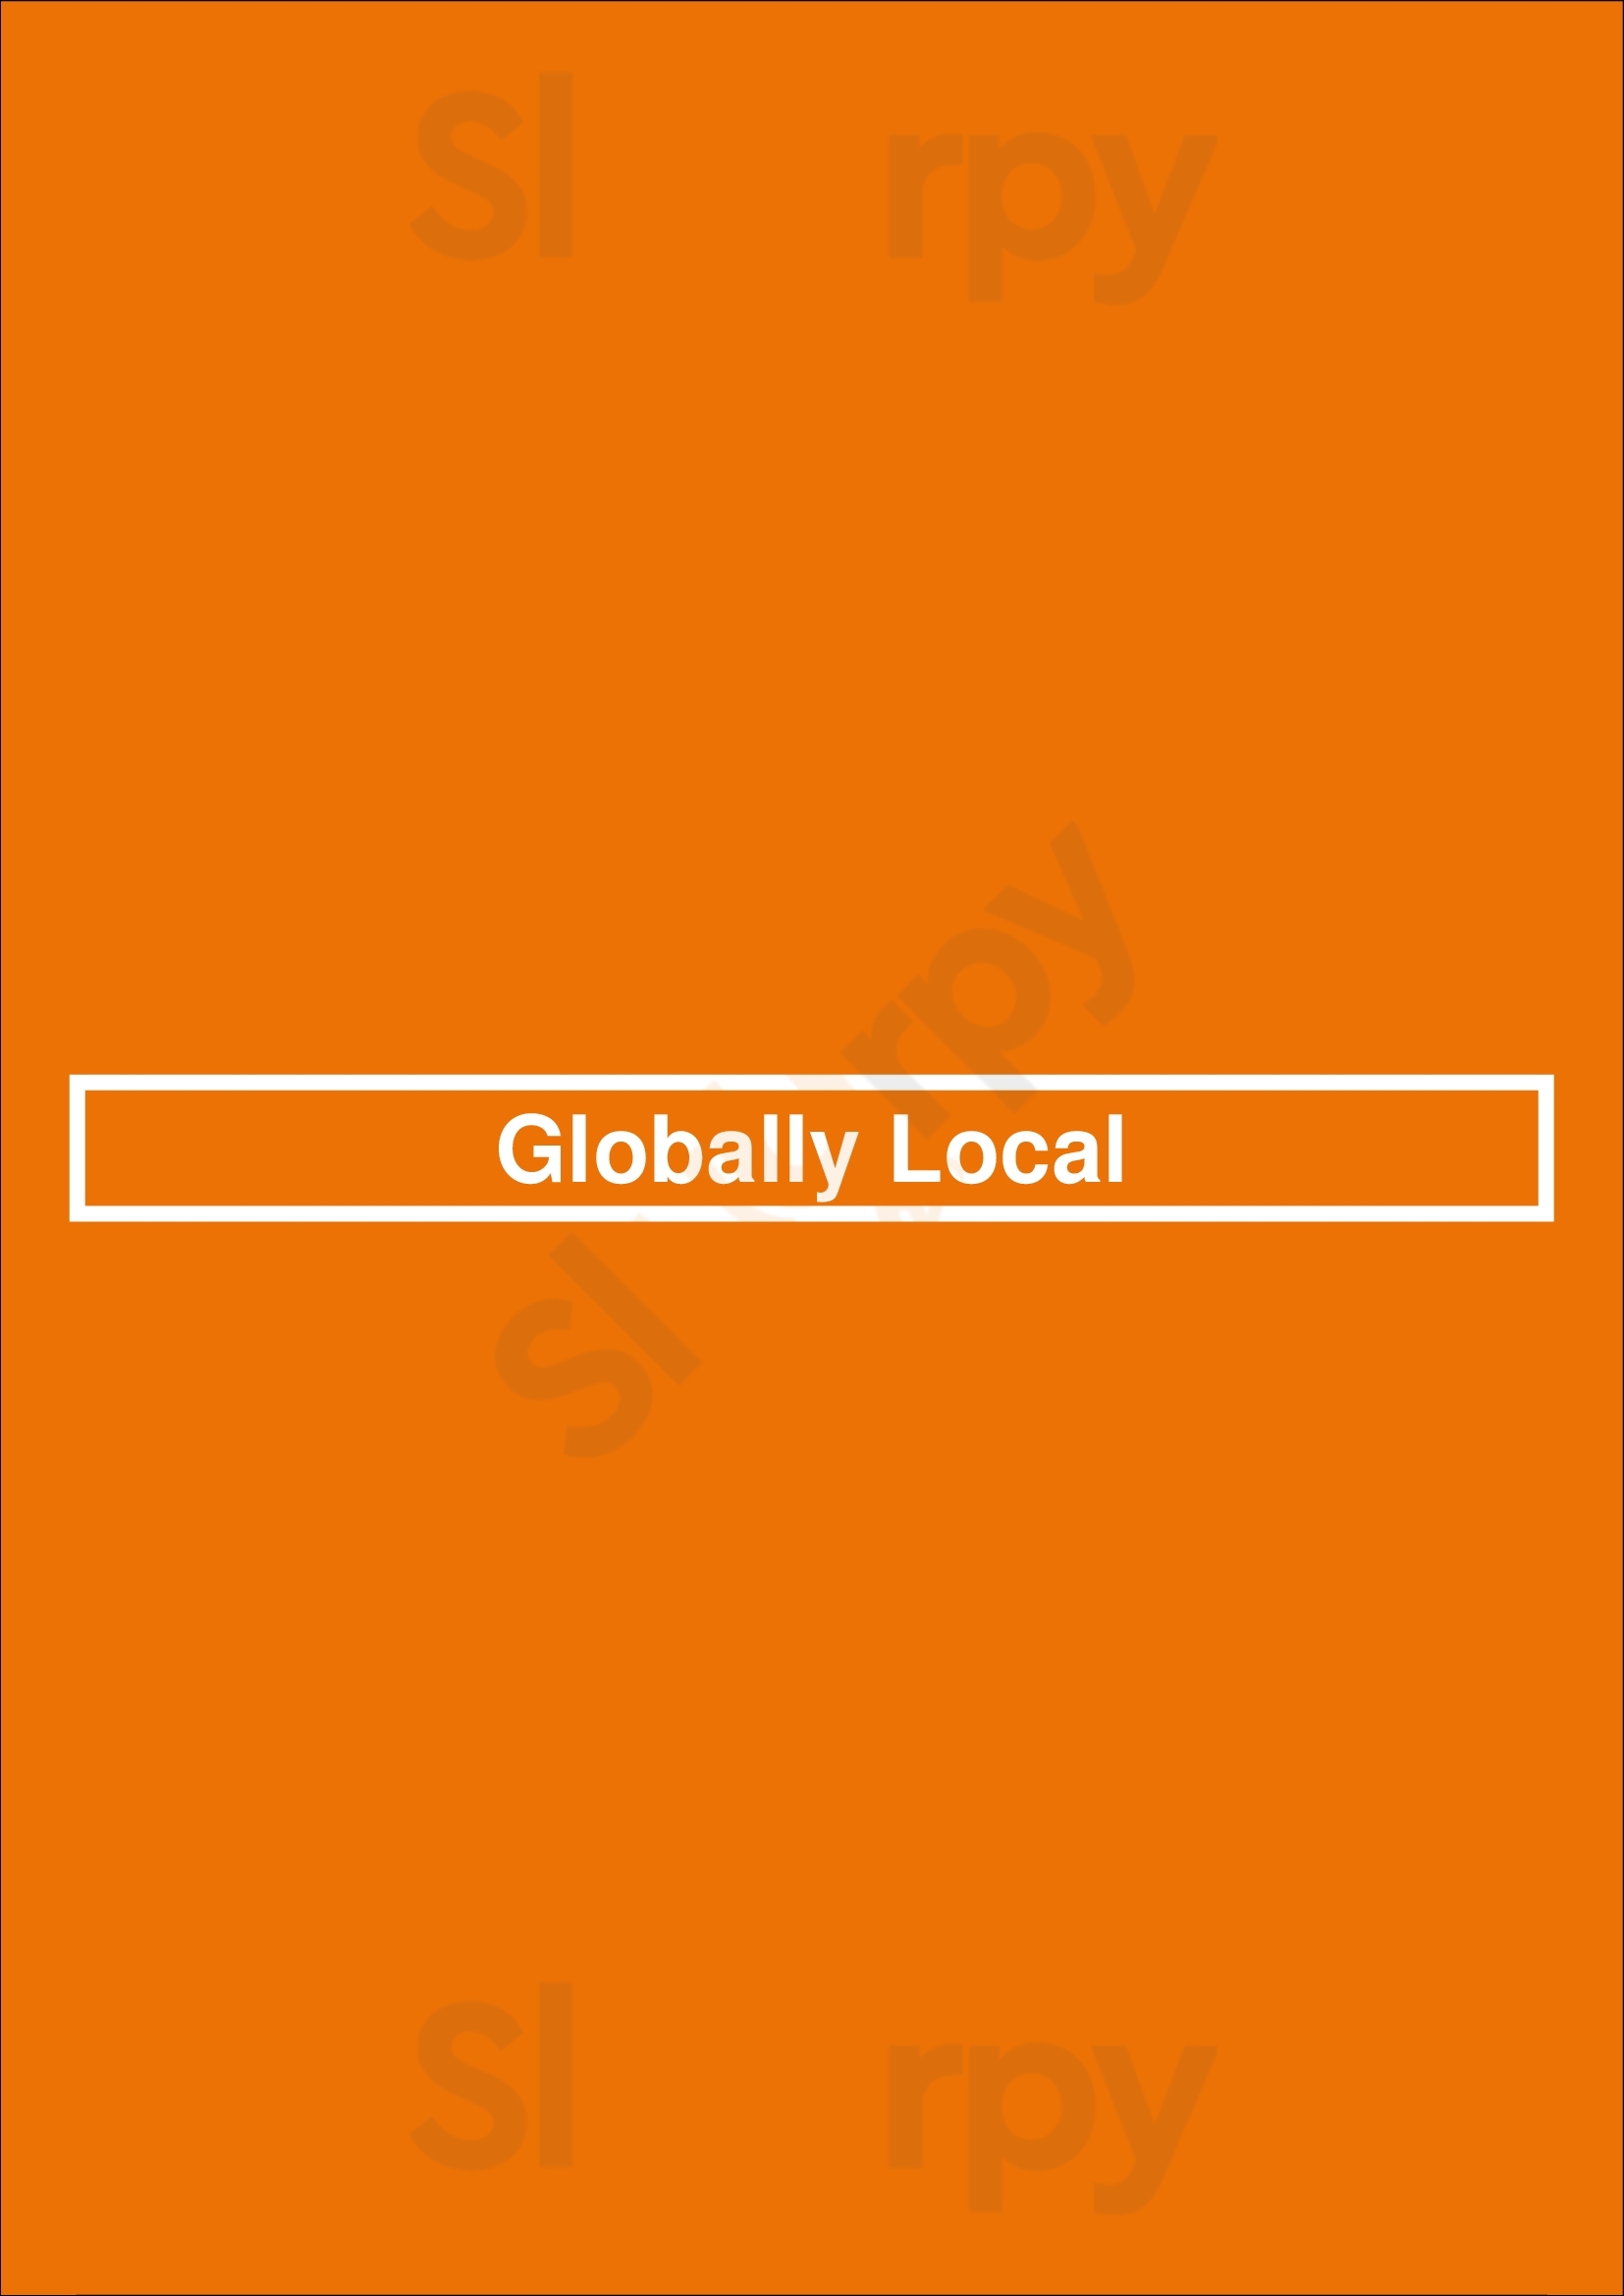 Globally Local London Menu - 1